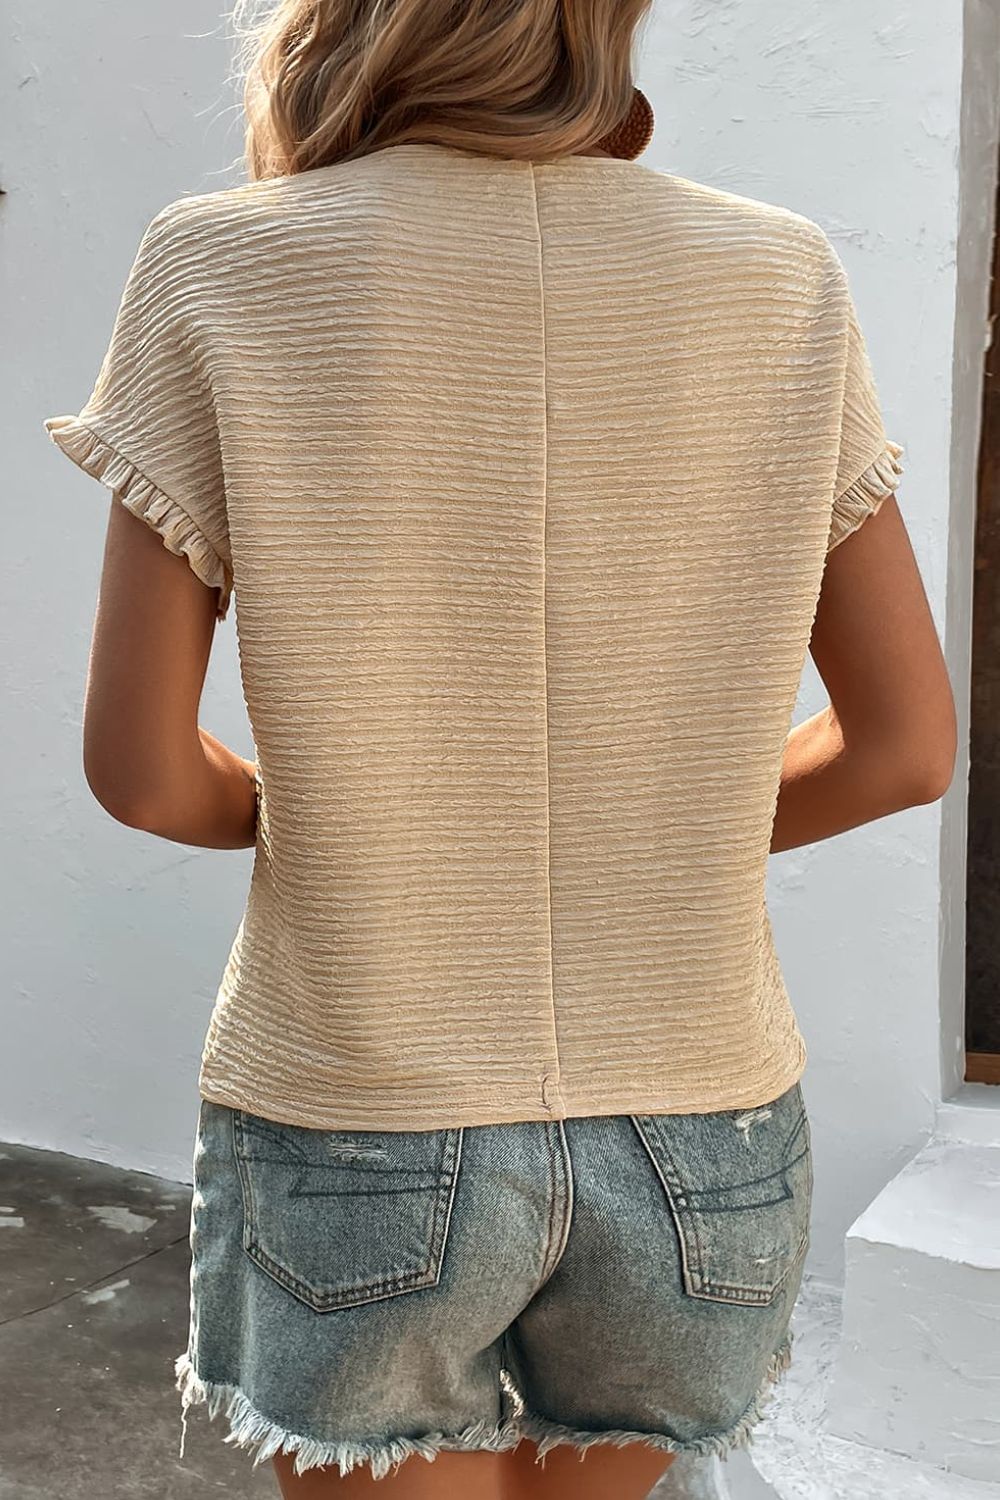 Textured Round Neck Short Sleeve Top - Lola Cerina Boutique